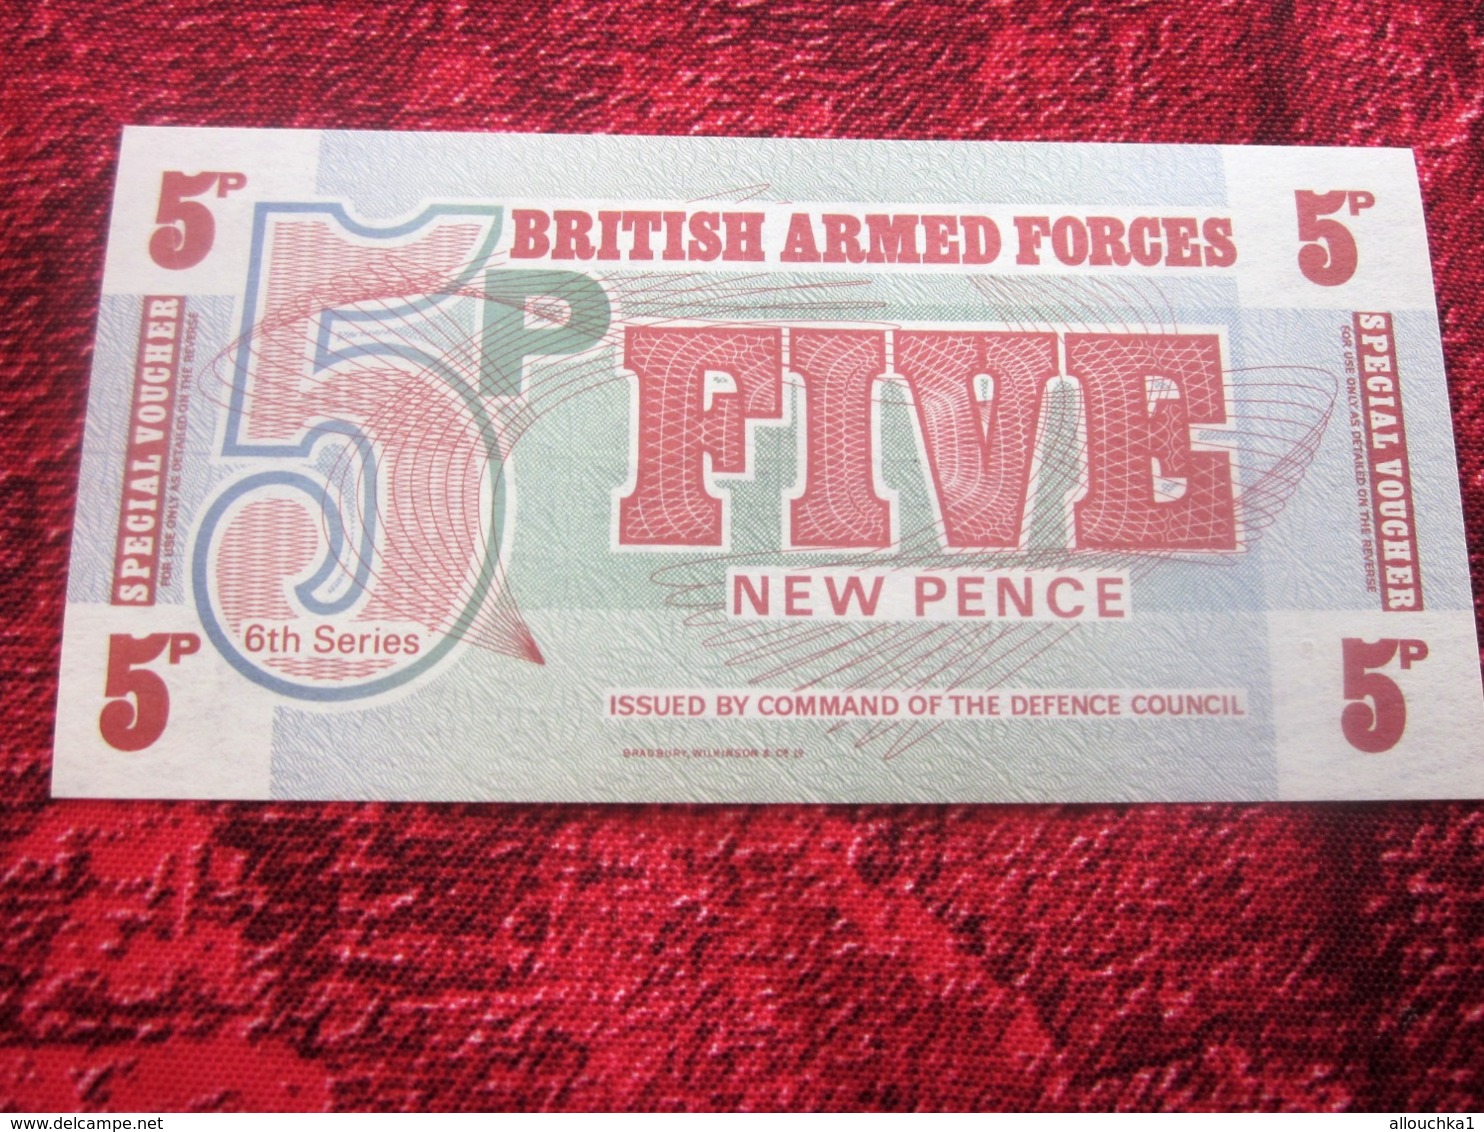 BRITISH ARMED FORCES BANK (BANKNOTE) 5 New Pence Uncirculated Banknote BILLET DE BANQUE - Forze Armate Britanniche & Docuementi Speciali